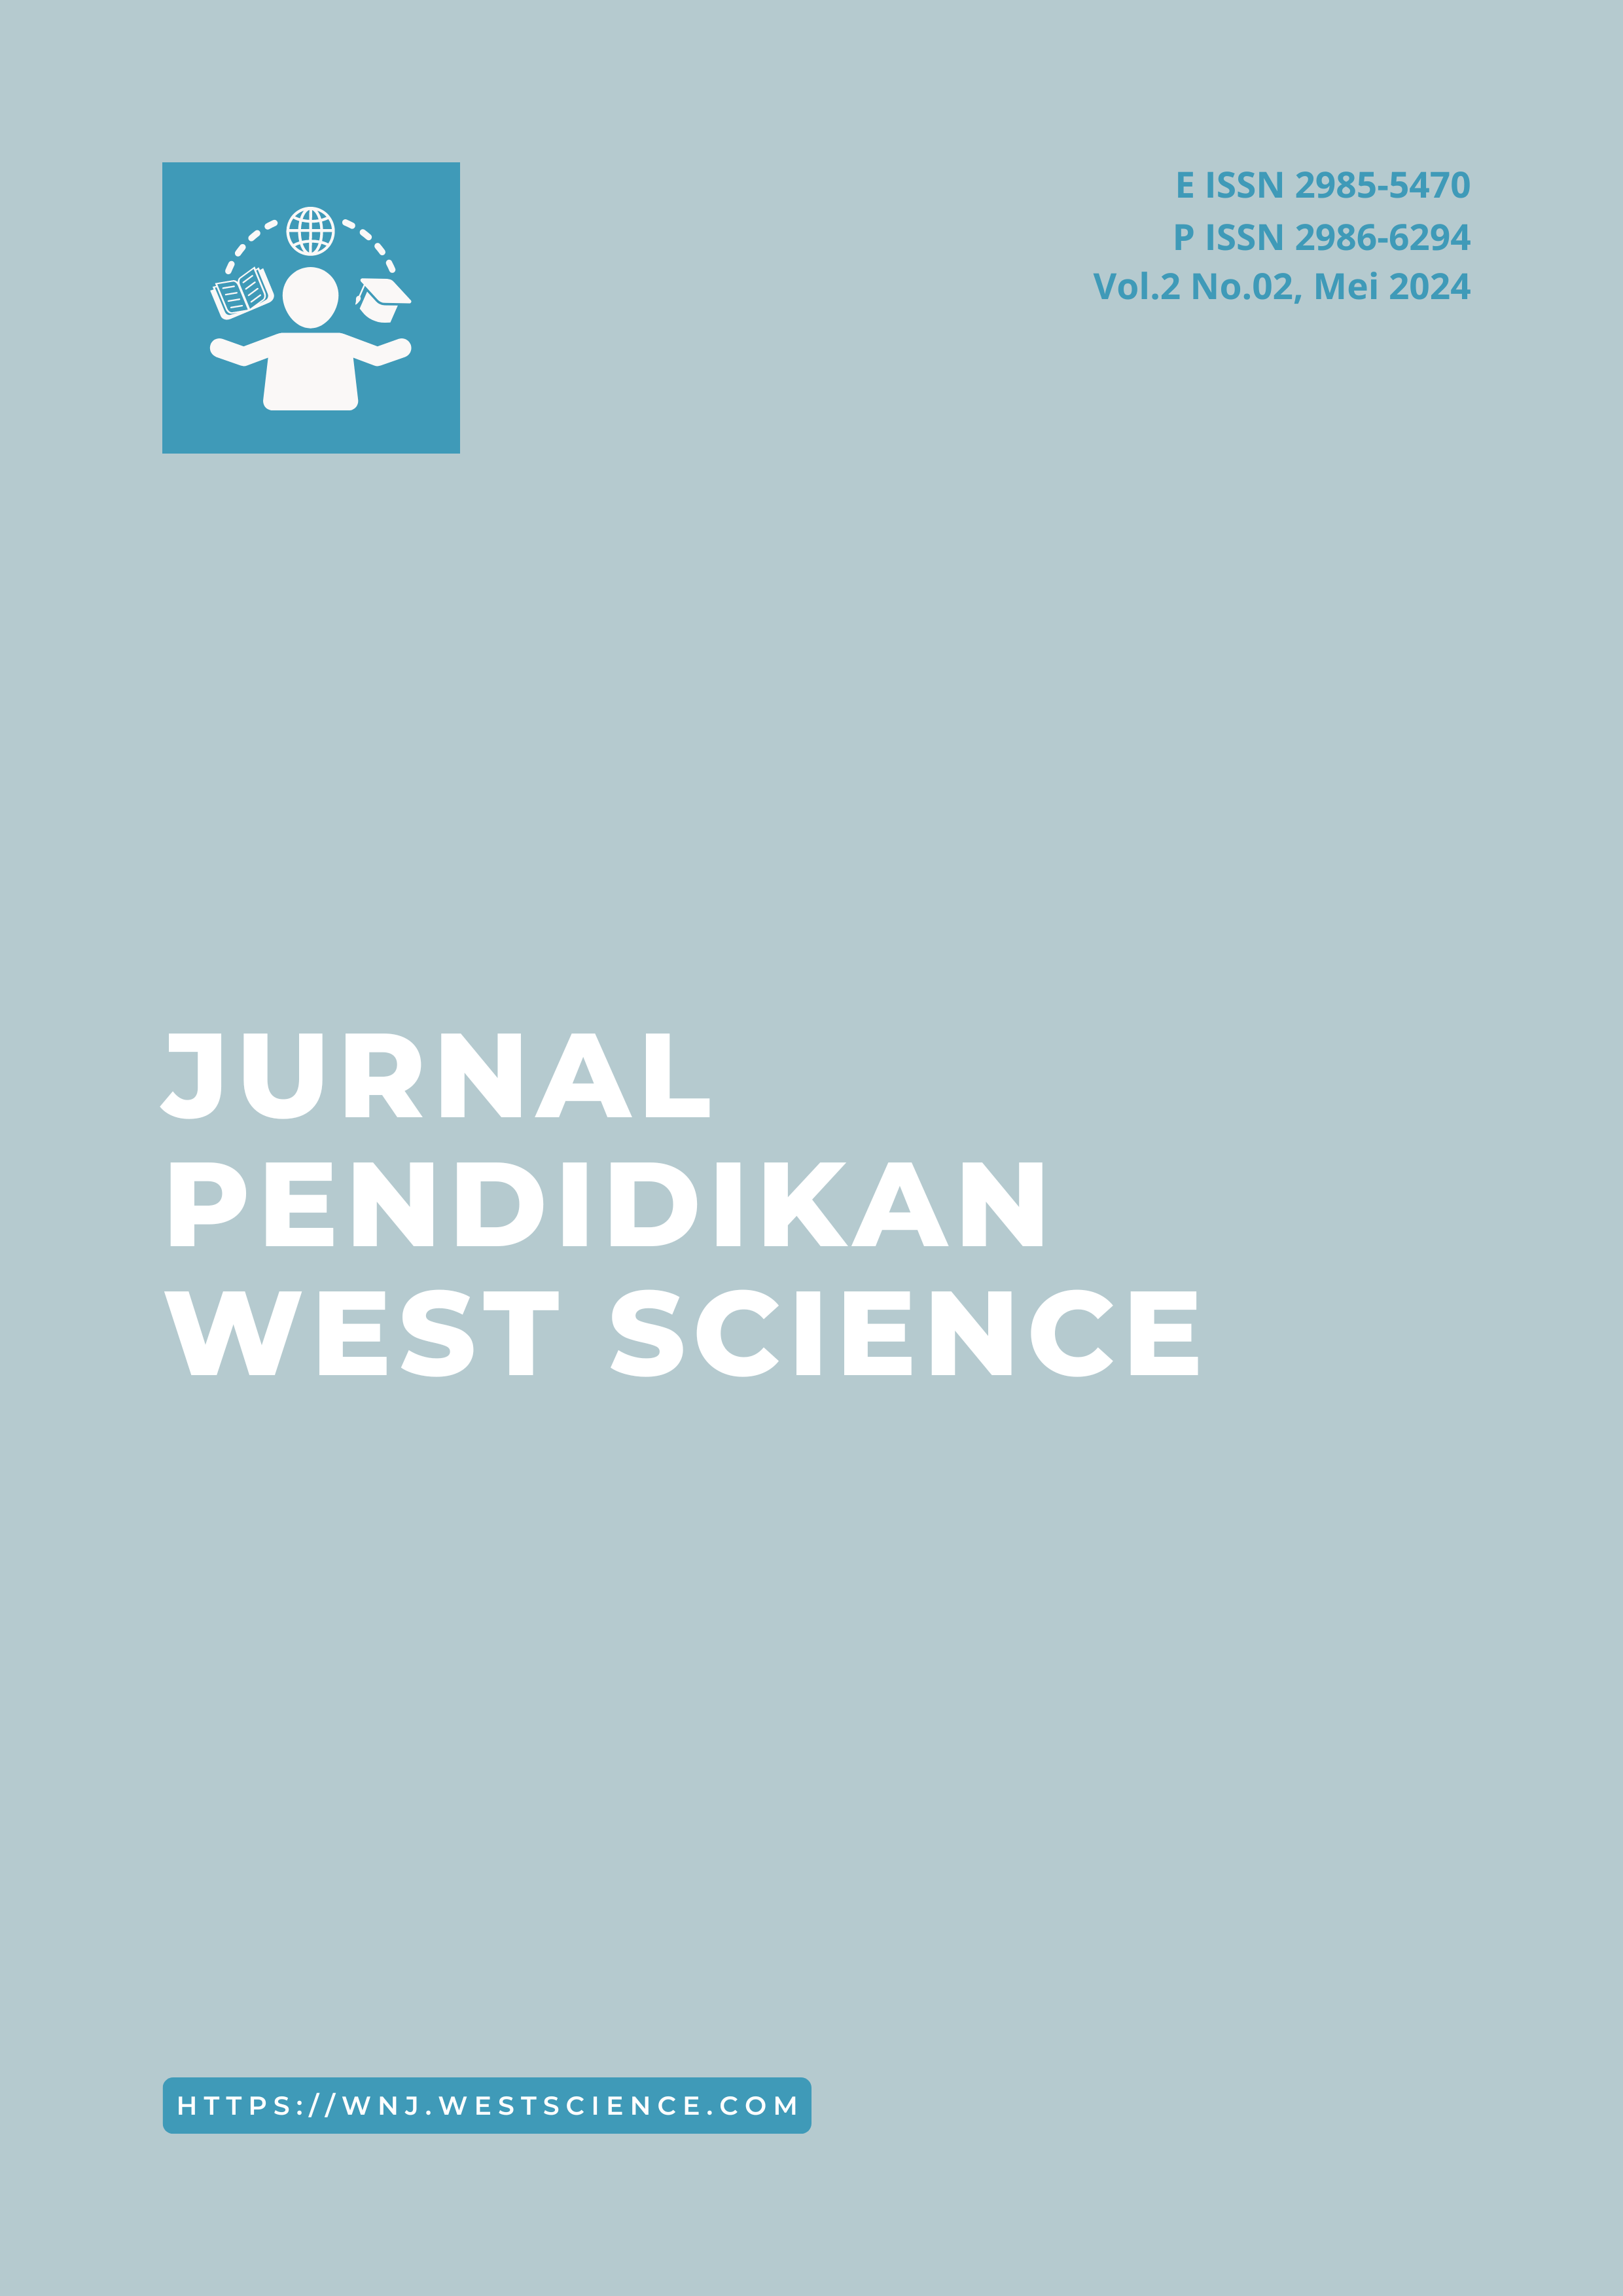 					Lihat Vol 2 No 02 (2024): Jurnal Pendidikan West Science
				